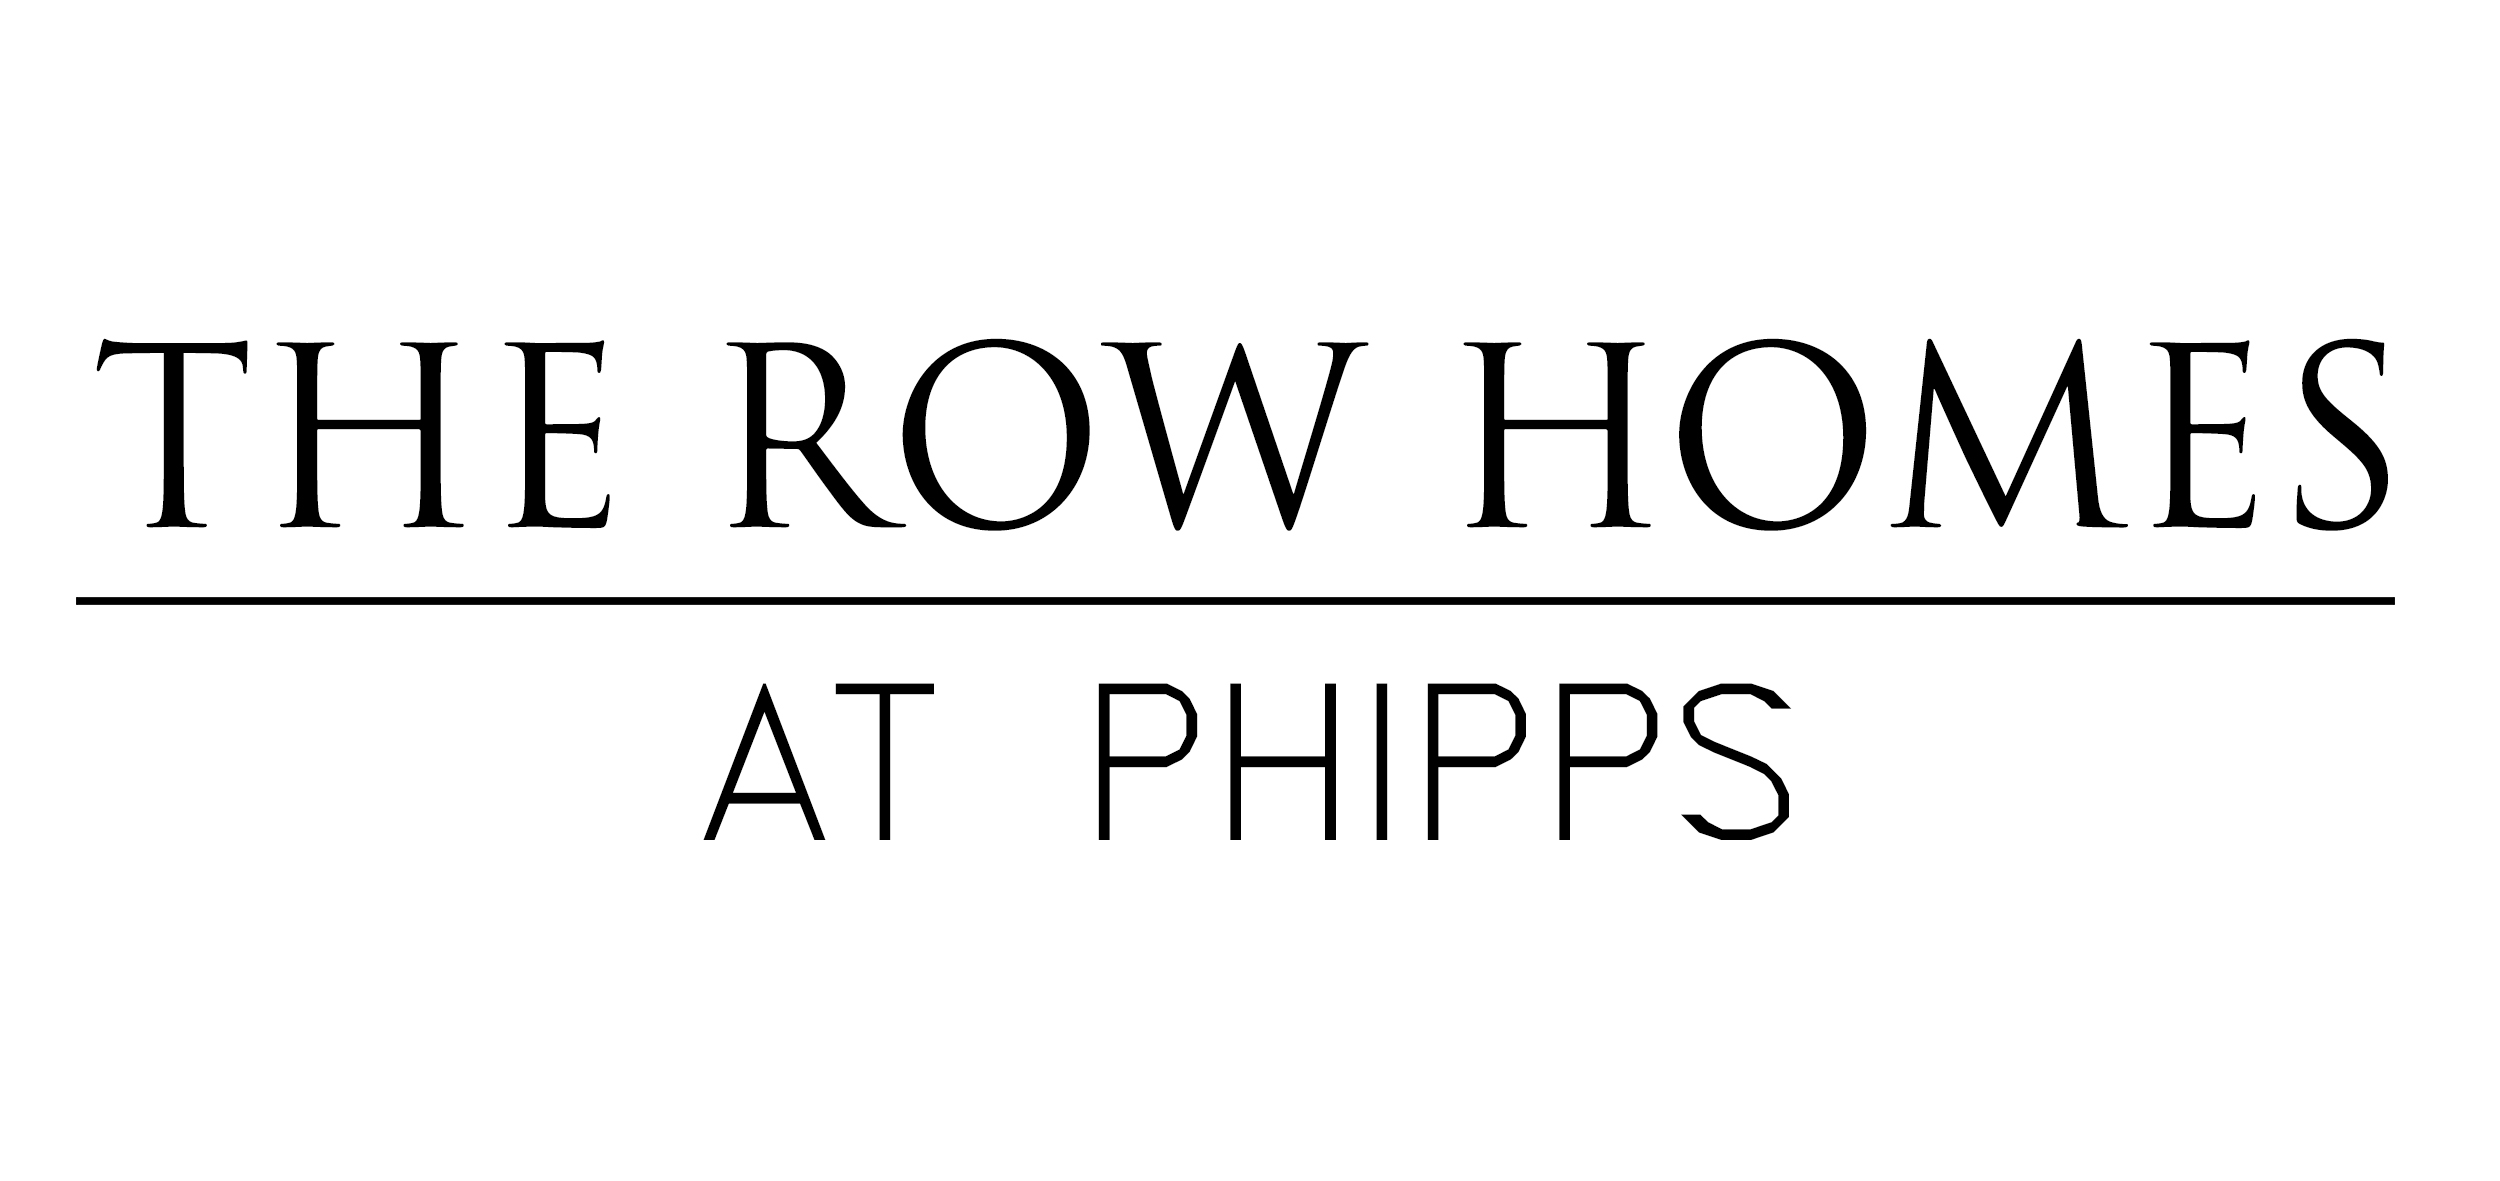 the row homes at phipps,atlanta